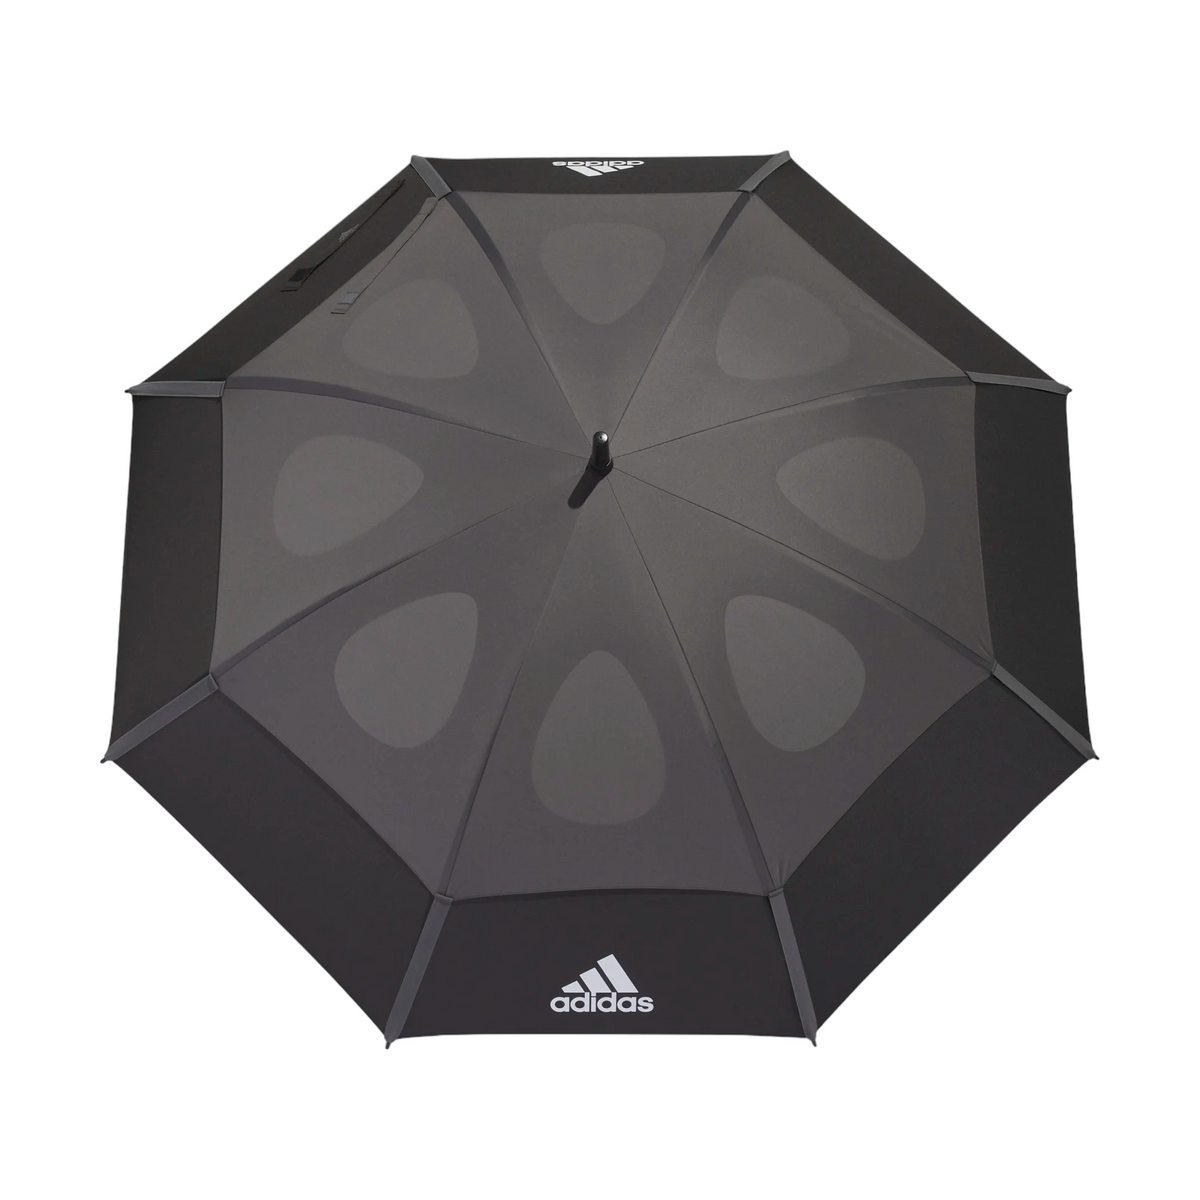 Adidas Double Canopy Umbrella 64", Adidas, Canada